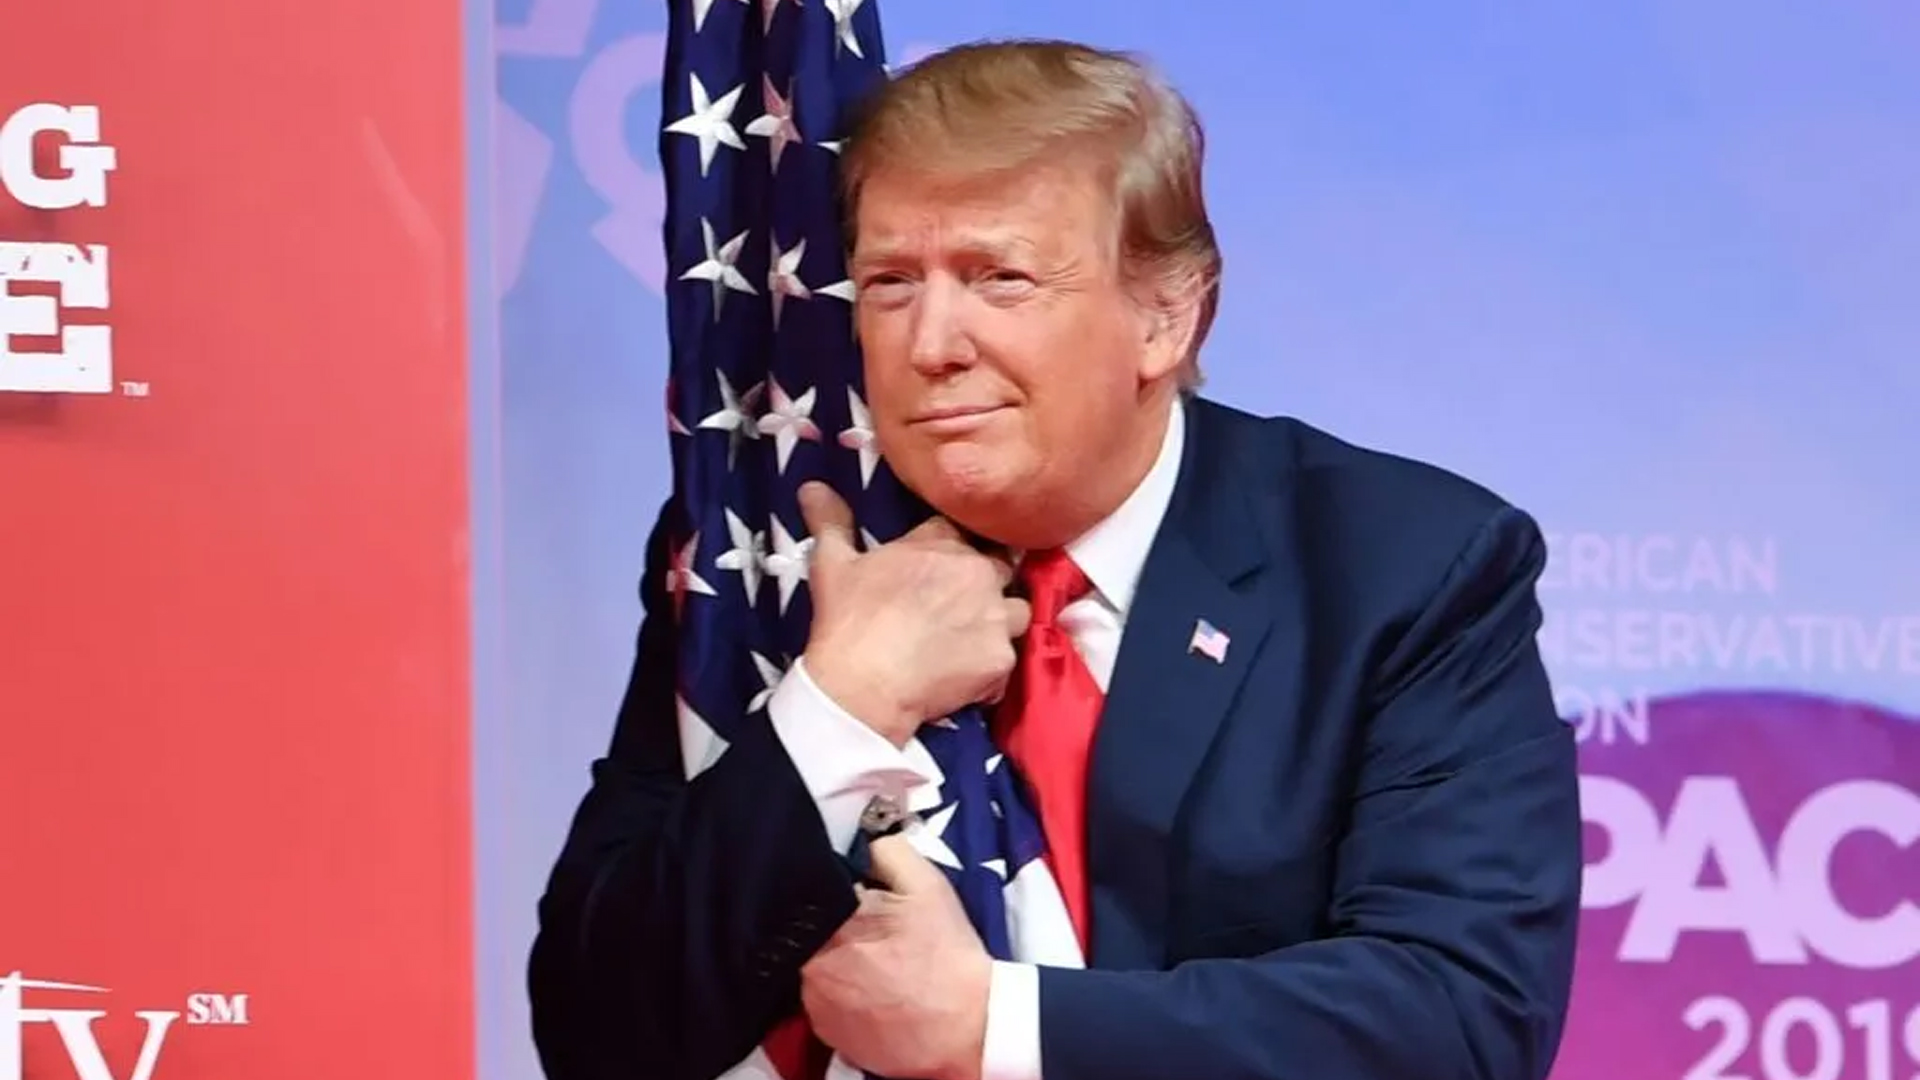 Donald Trumpo con bandera